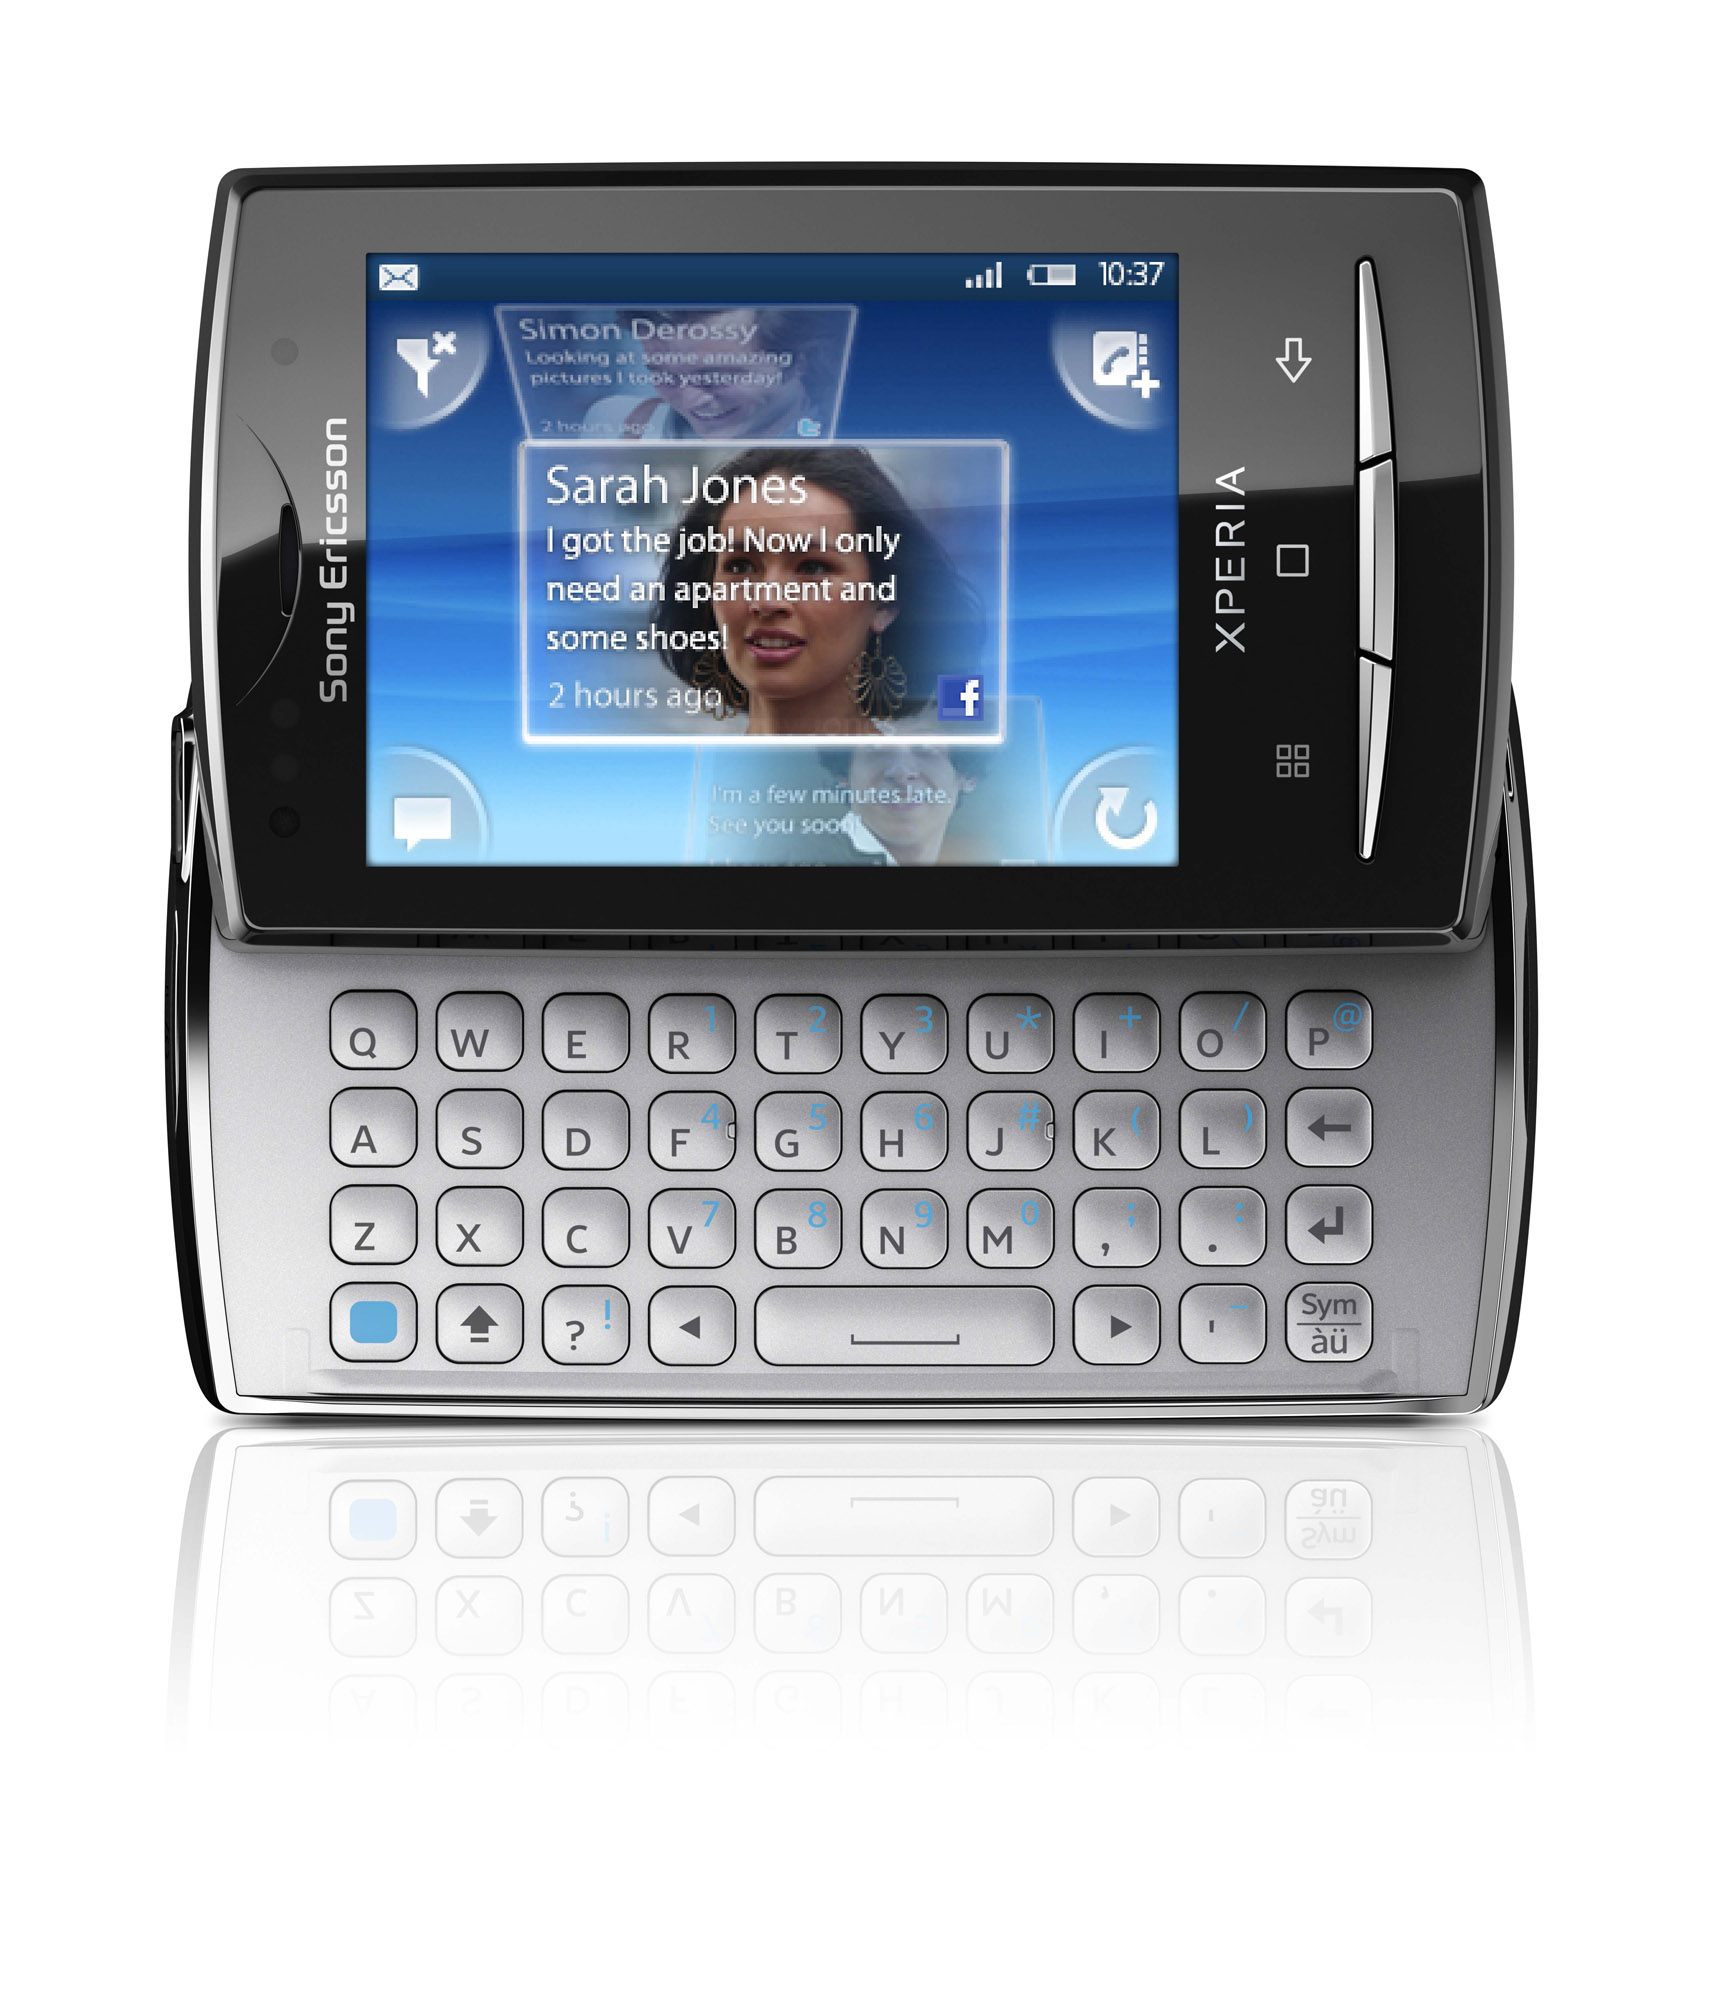 Слайдер 10. Смартфон Sony Ericsson Xperia x10. Sony Ericsson Xperia x10 Mini. Sony Ericsson Xperia x10 Mini Pro (u20i). Sony Ericsson слайдер c клавиатурой.